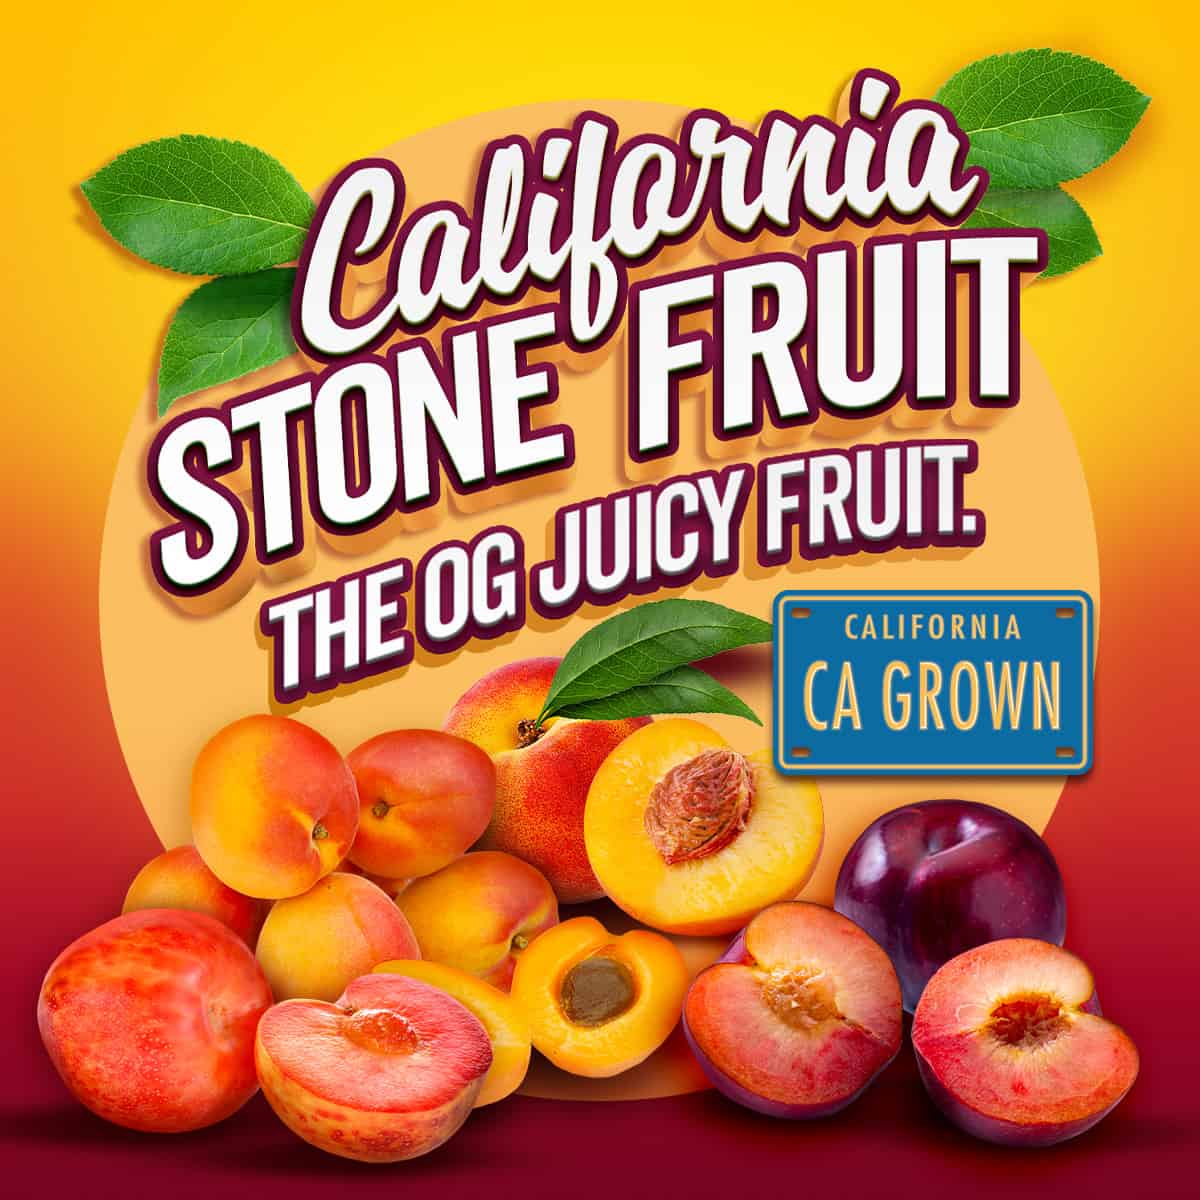 GTBG stone fruit graphic